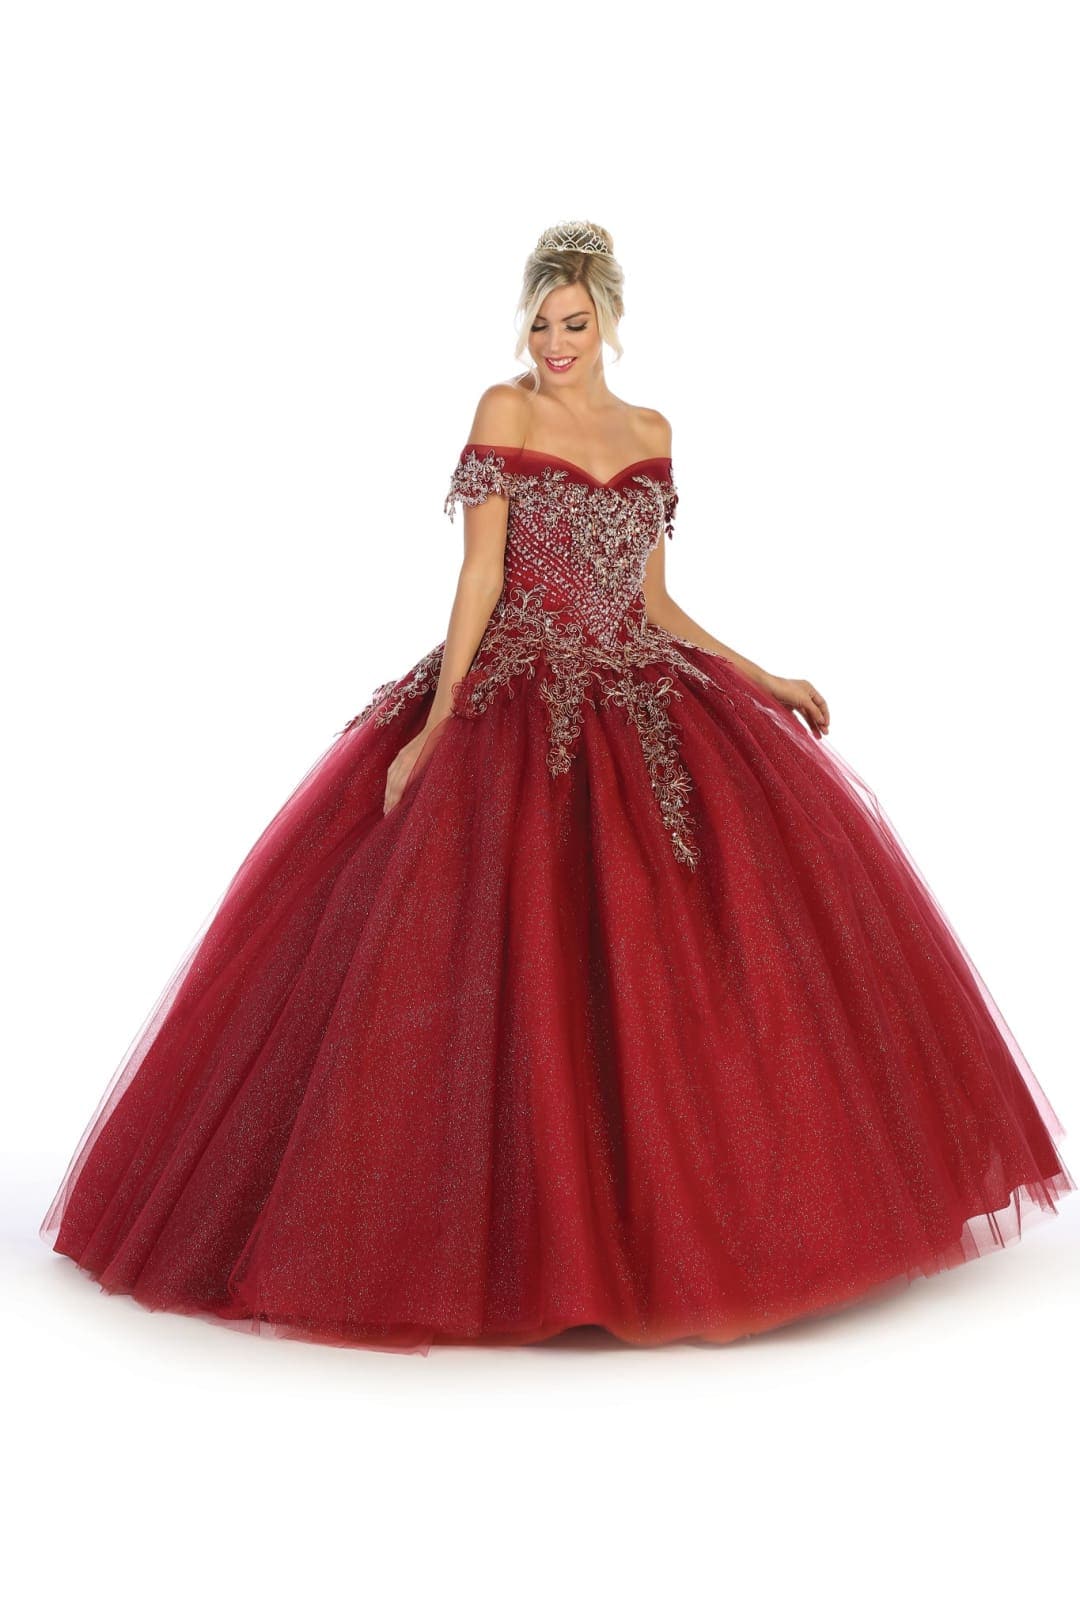 Layla K LK119 Beaded Glitter Off The Shoulder Quinceañera Ball Gown - BURGUNDY / 6 - Dress